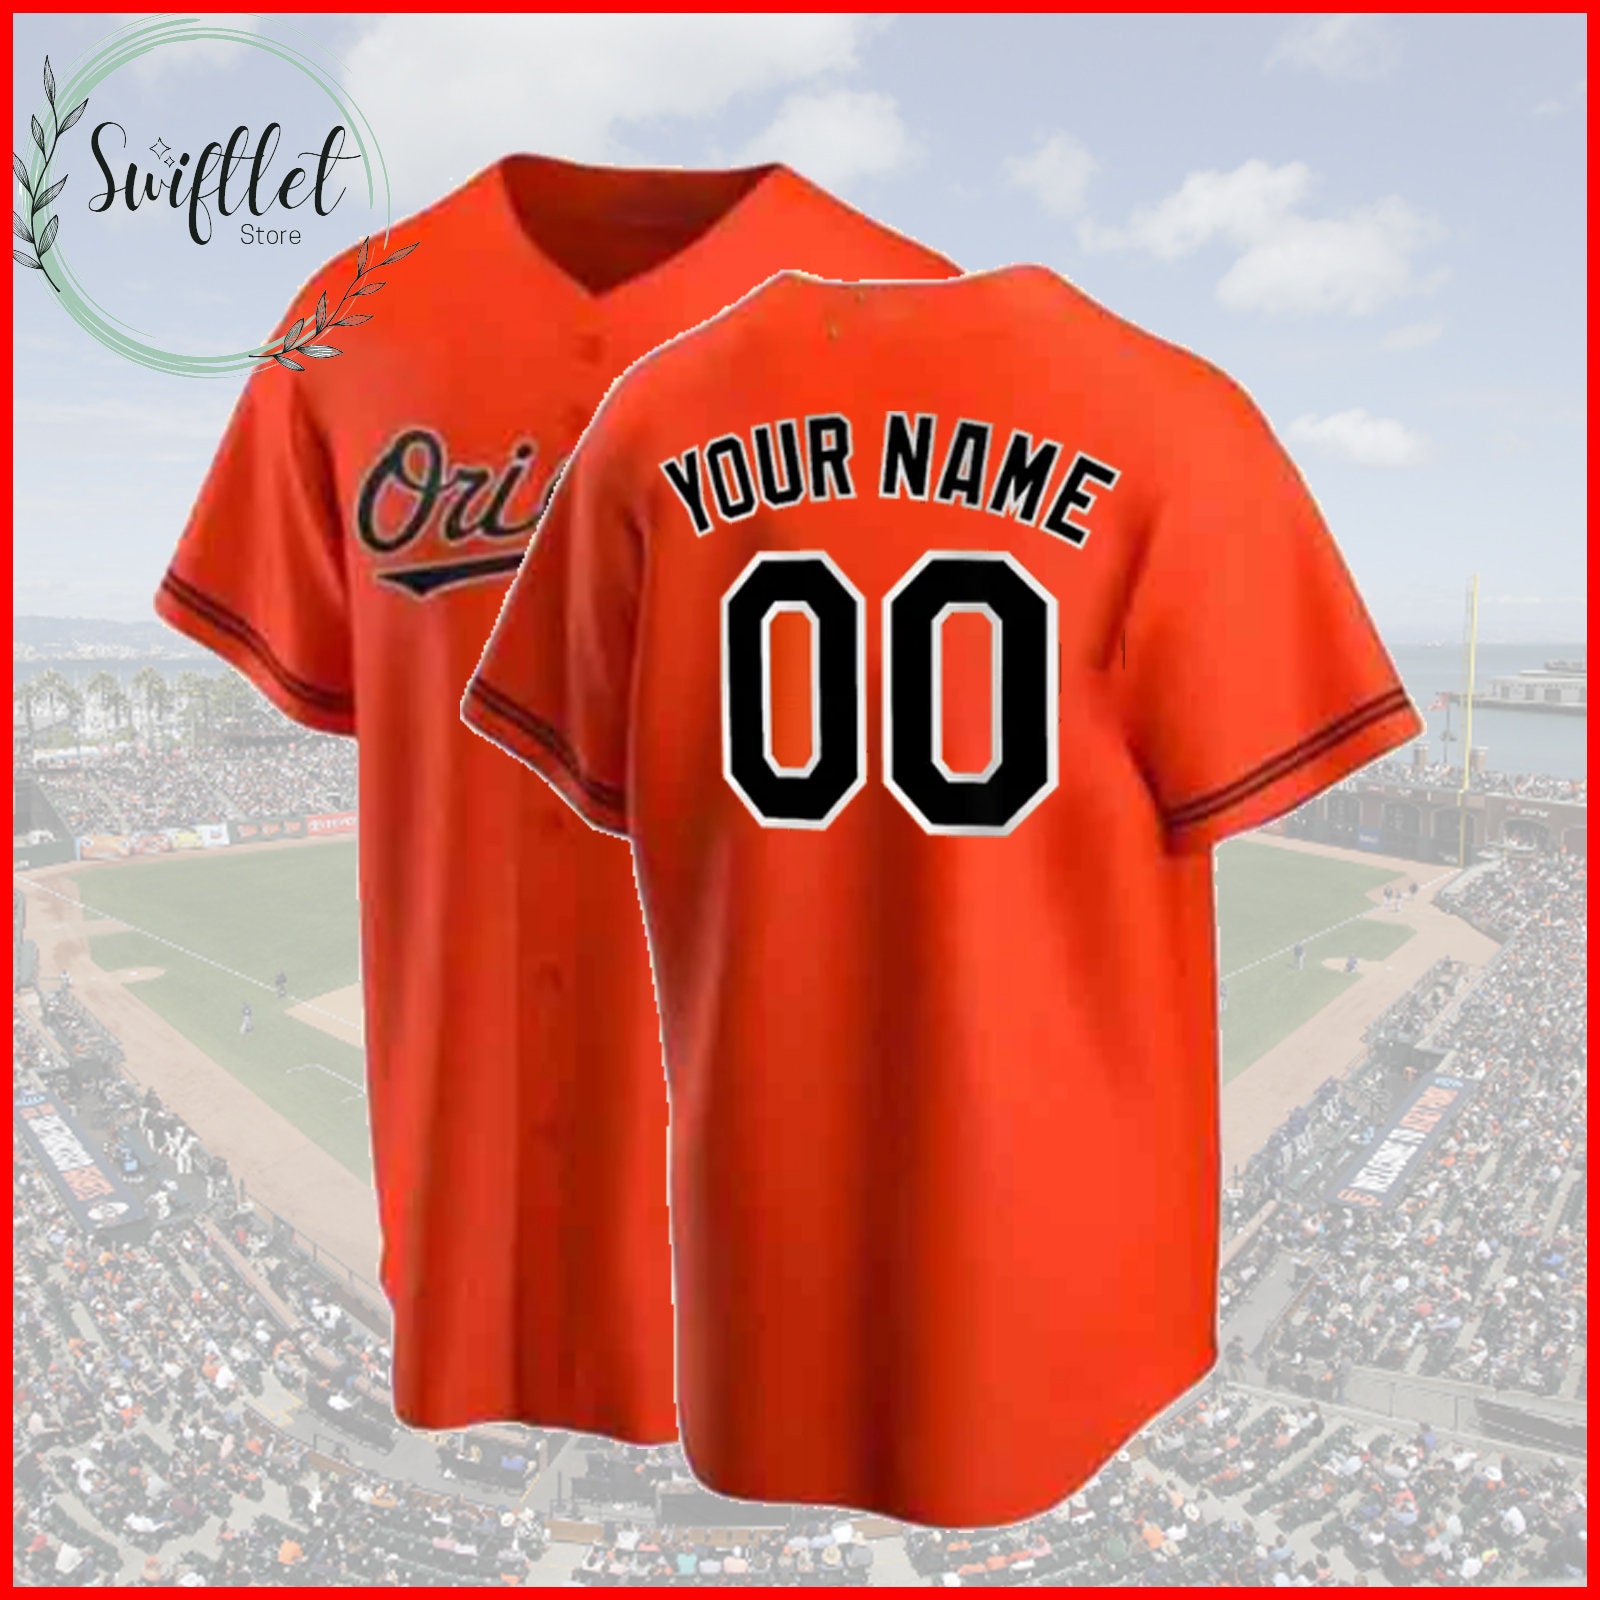 Personalized Baltimore Baseball Game Jersey, Baltimore Custom Name & Number